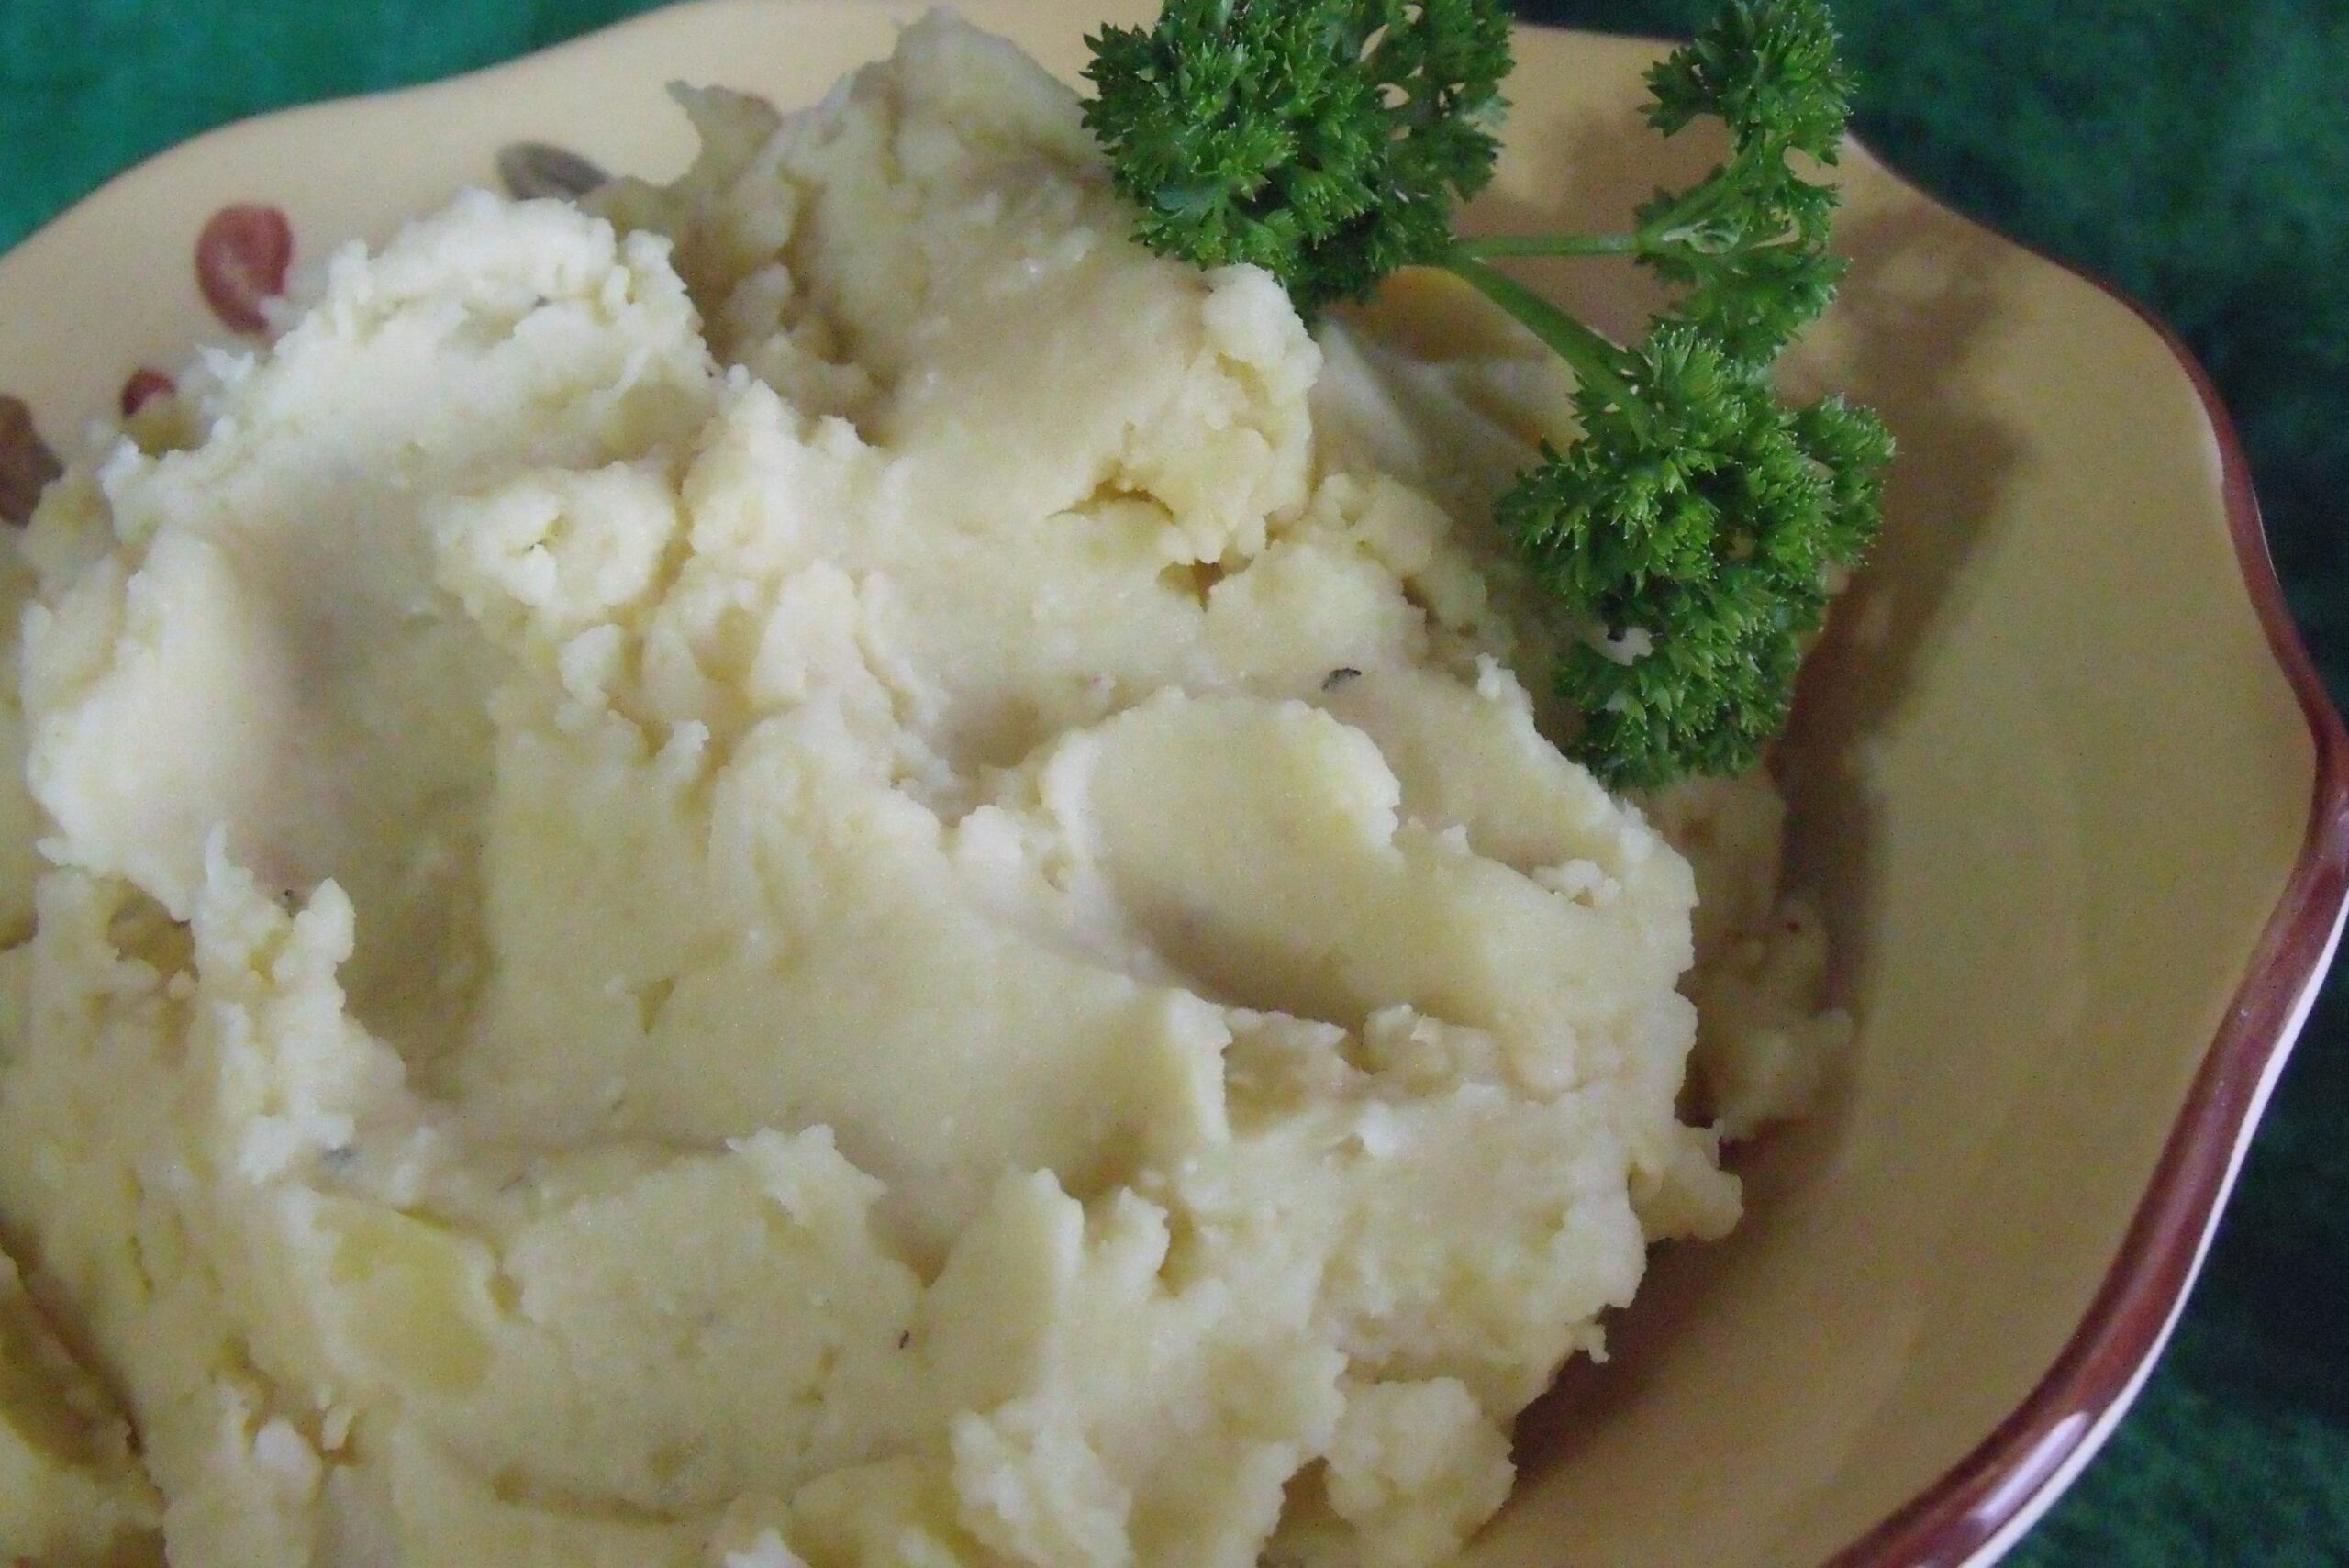 Delicious Irish mashed potato and cabbage recipe